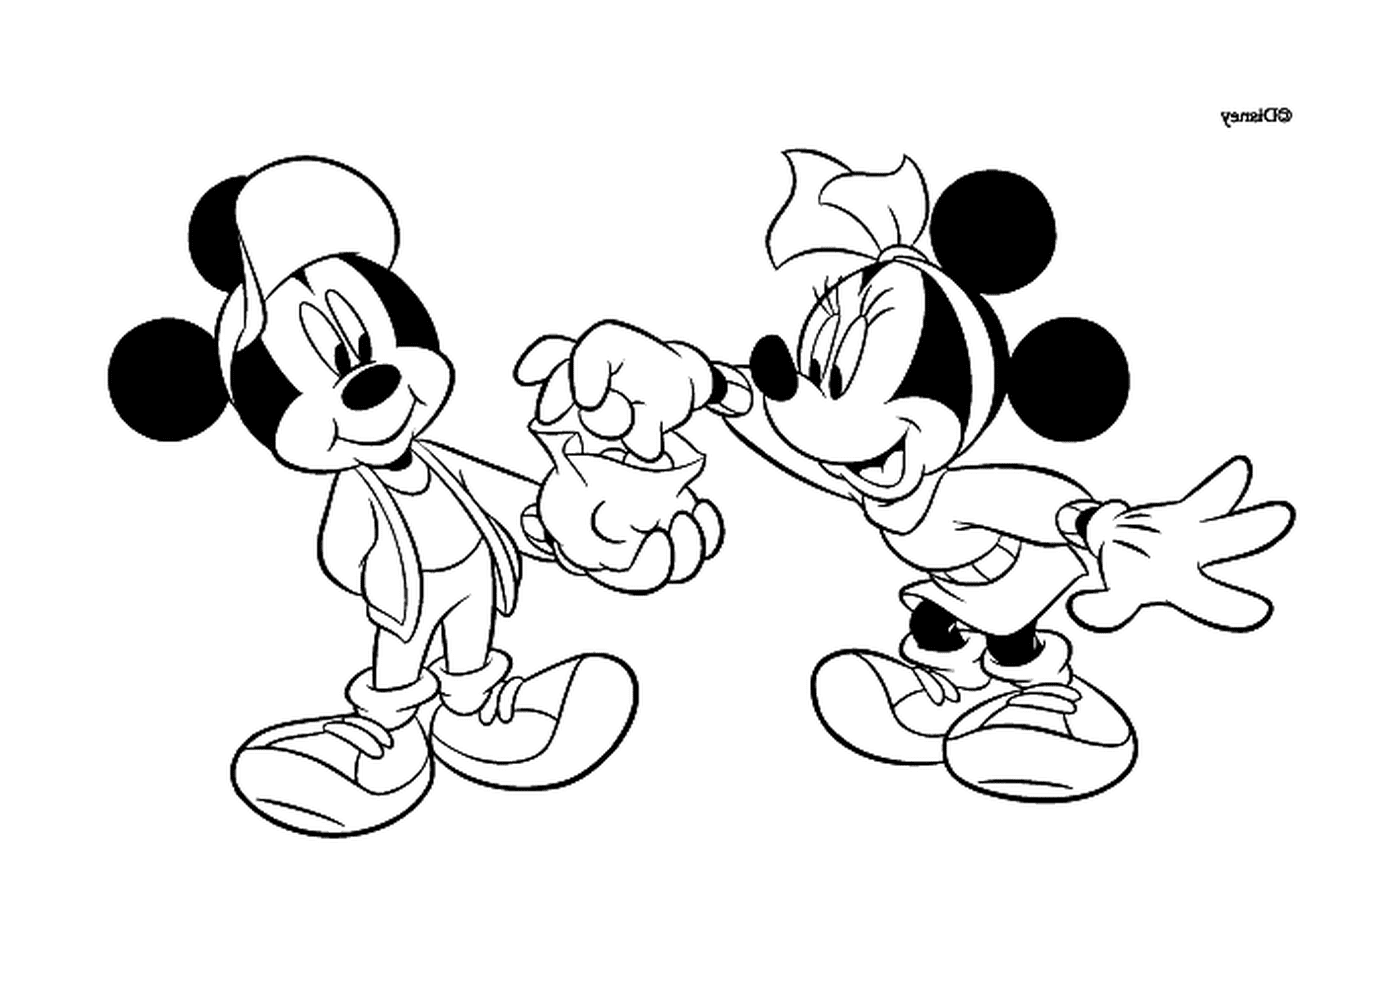  Mickey ofrece dulces a Minnie 